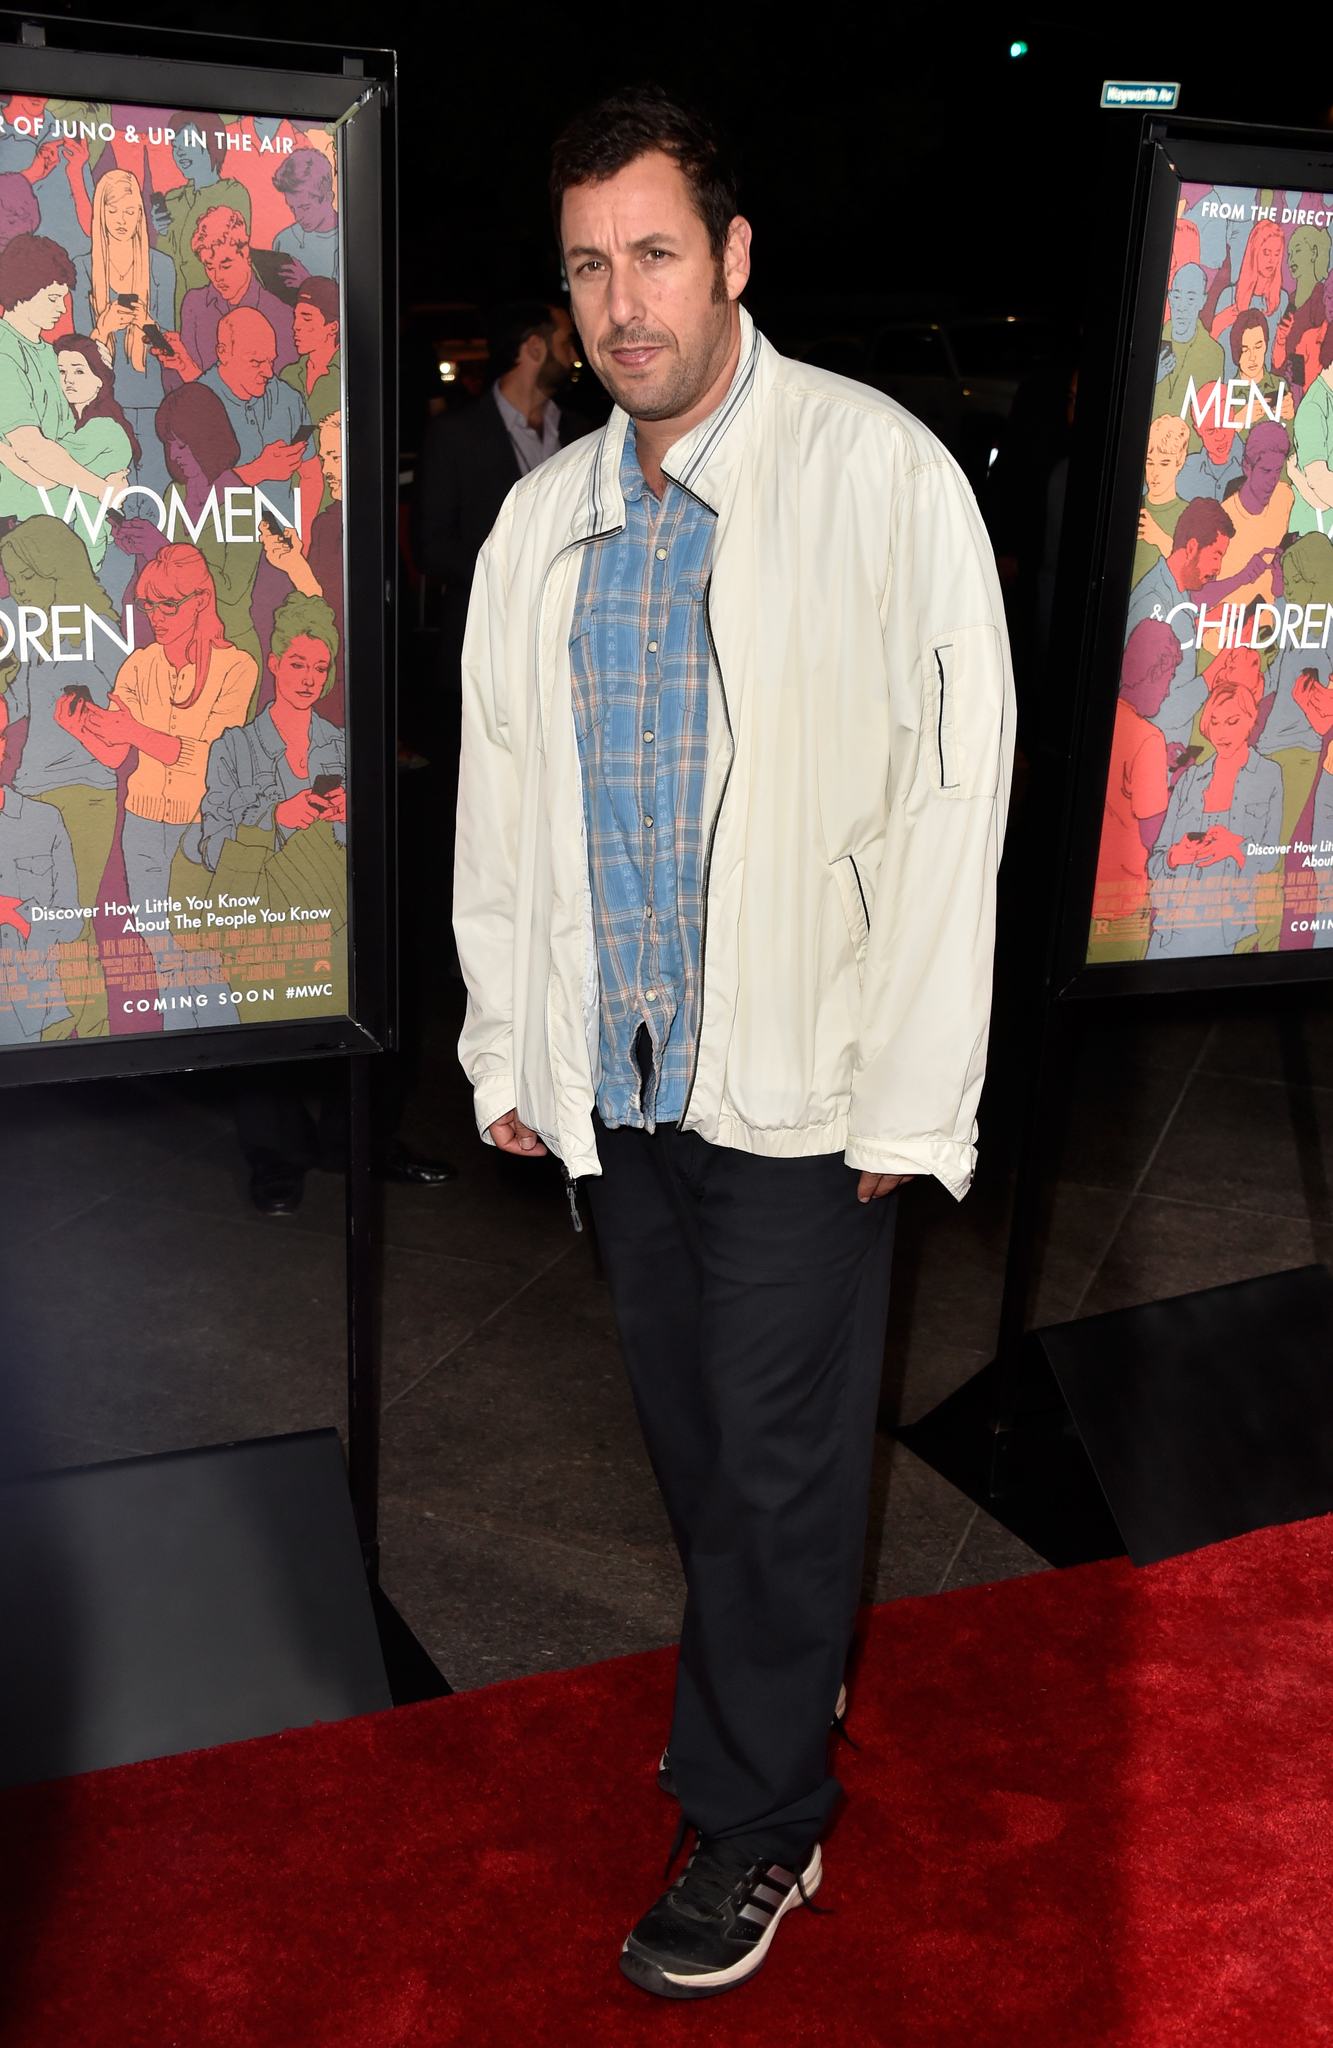 Adam Sandler at event of Men, Women & Children (2014)